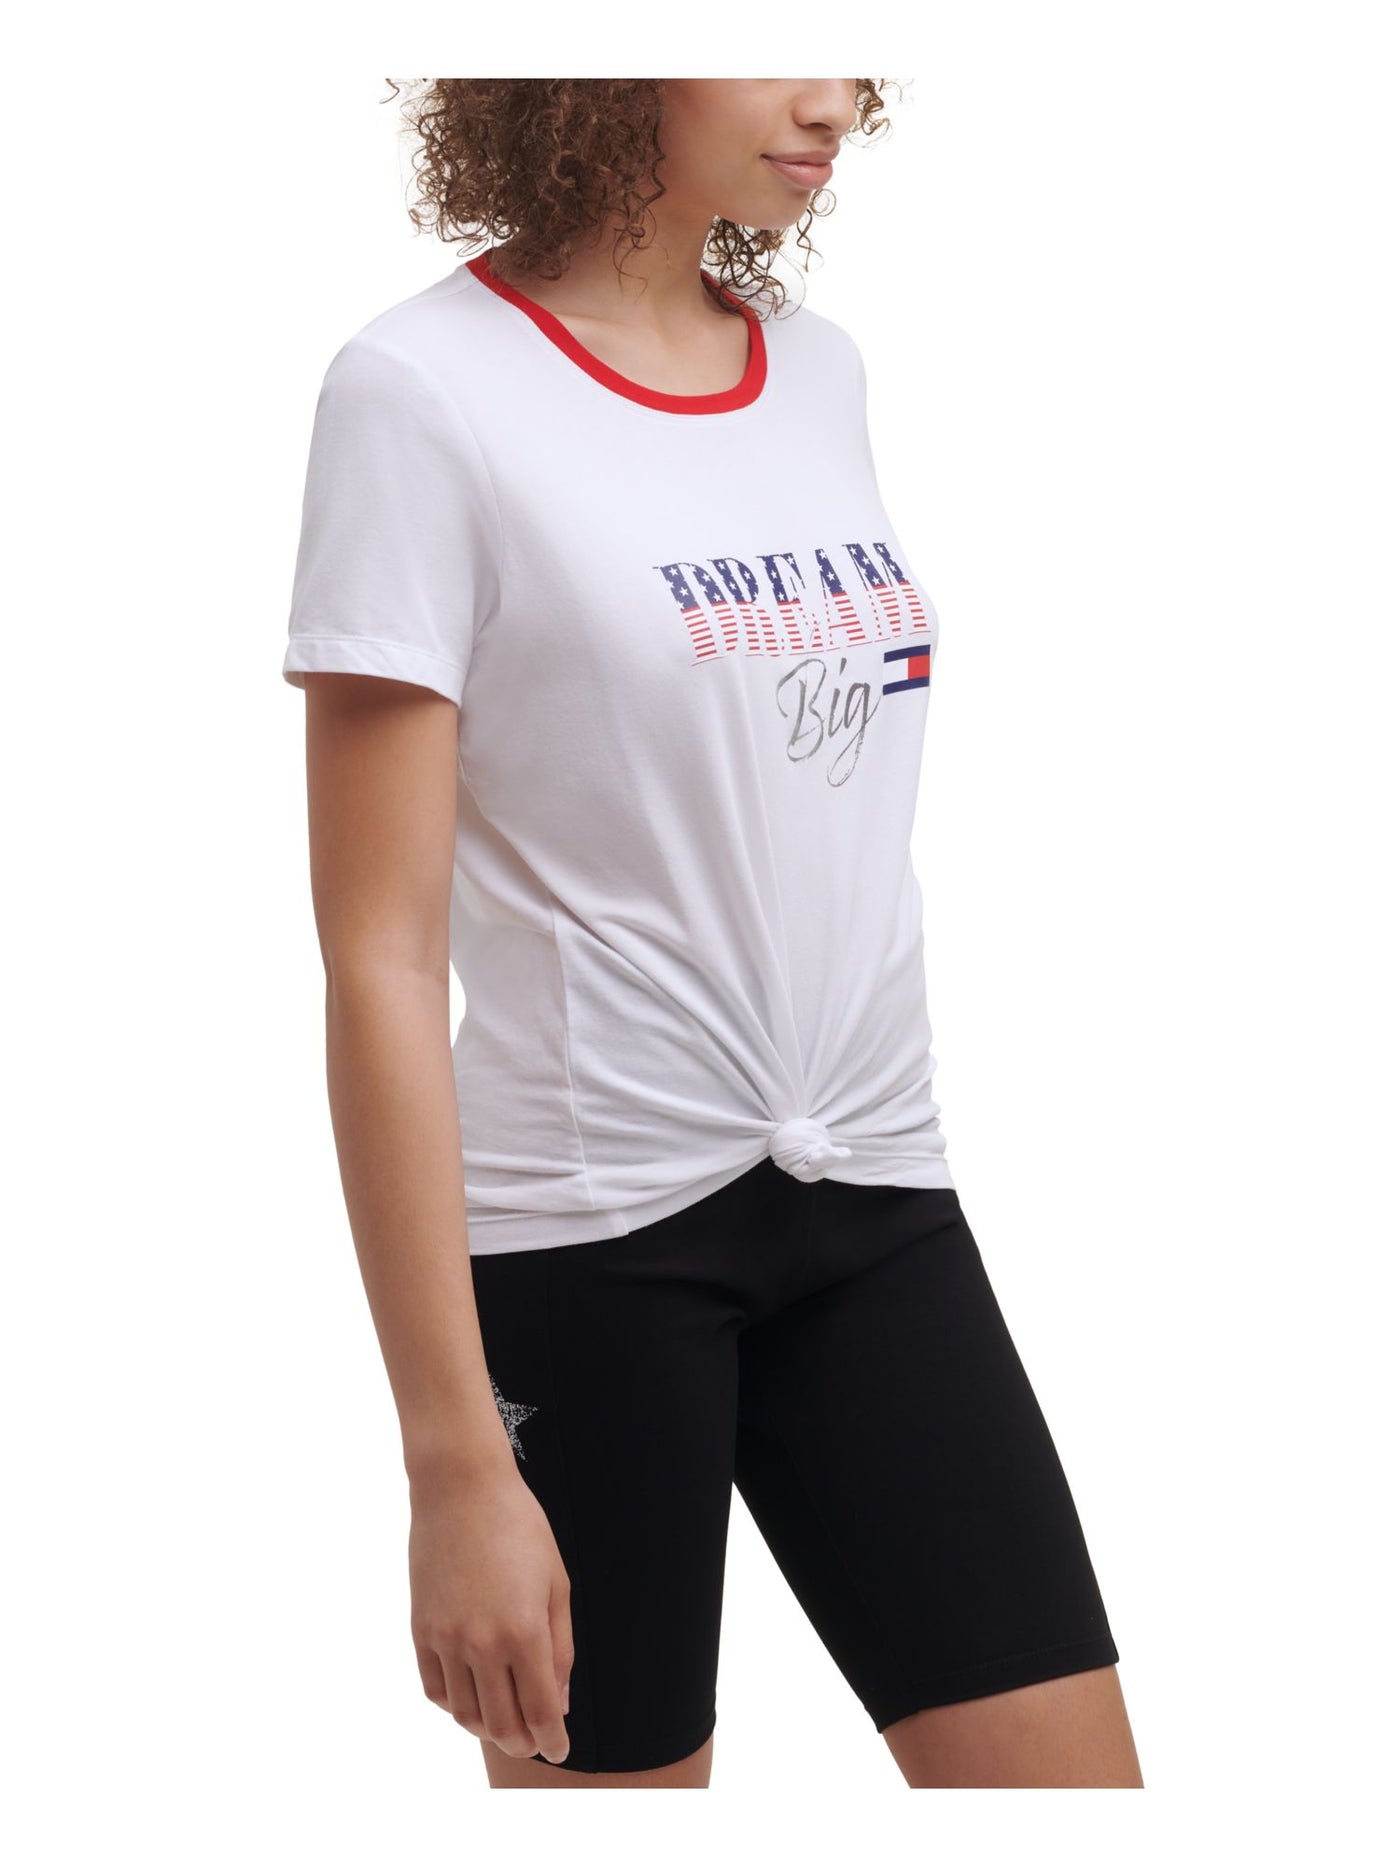 TOMMY HILFIGER SPORT Womens White Cotton Blend Graphic Short Sleeve Crew Neck T-Shirt XS